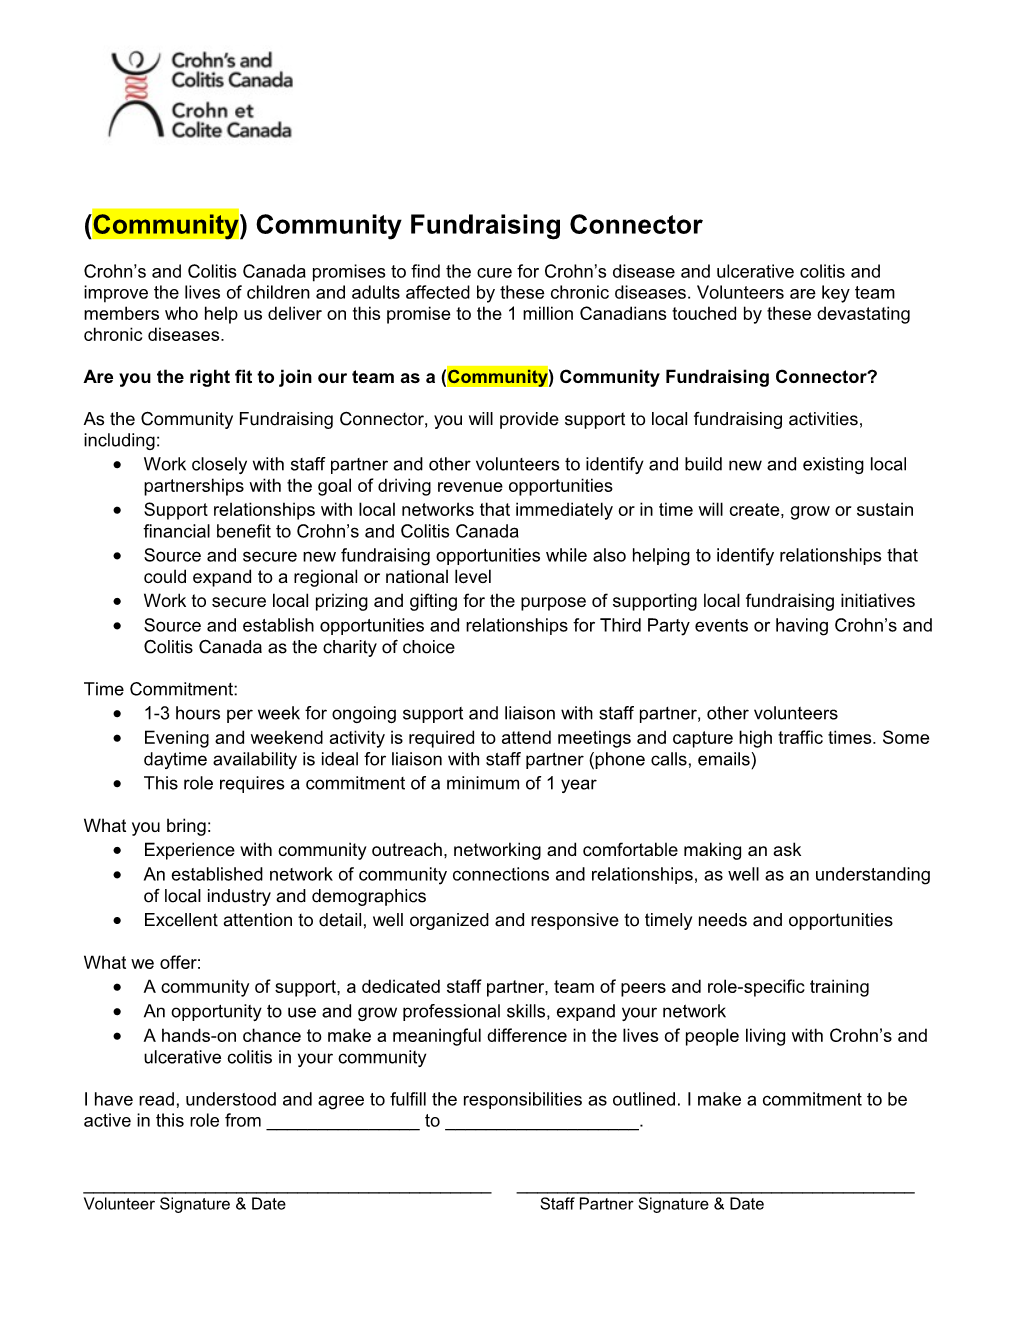 (Community) Communityfundraising Connector